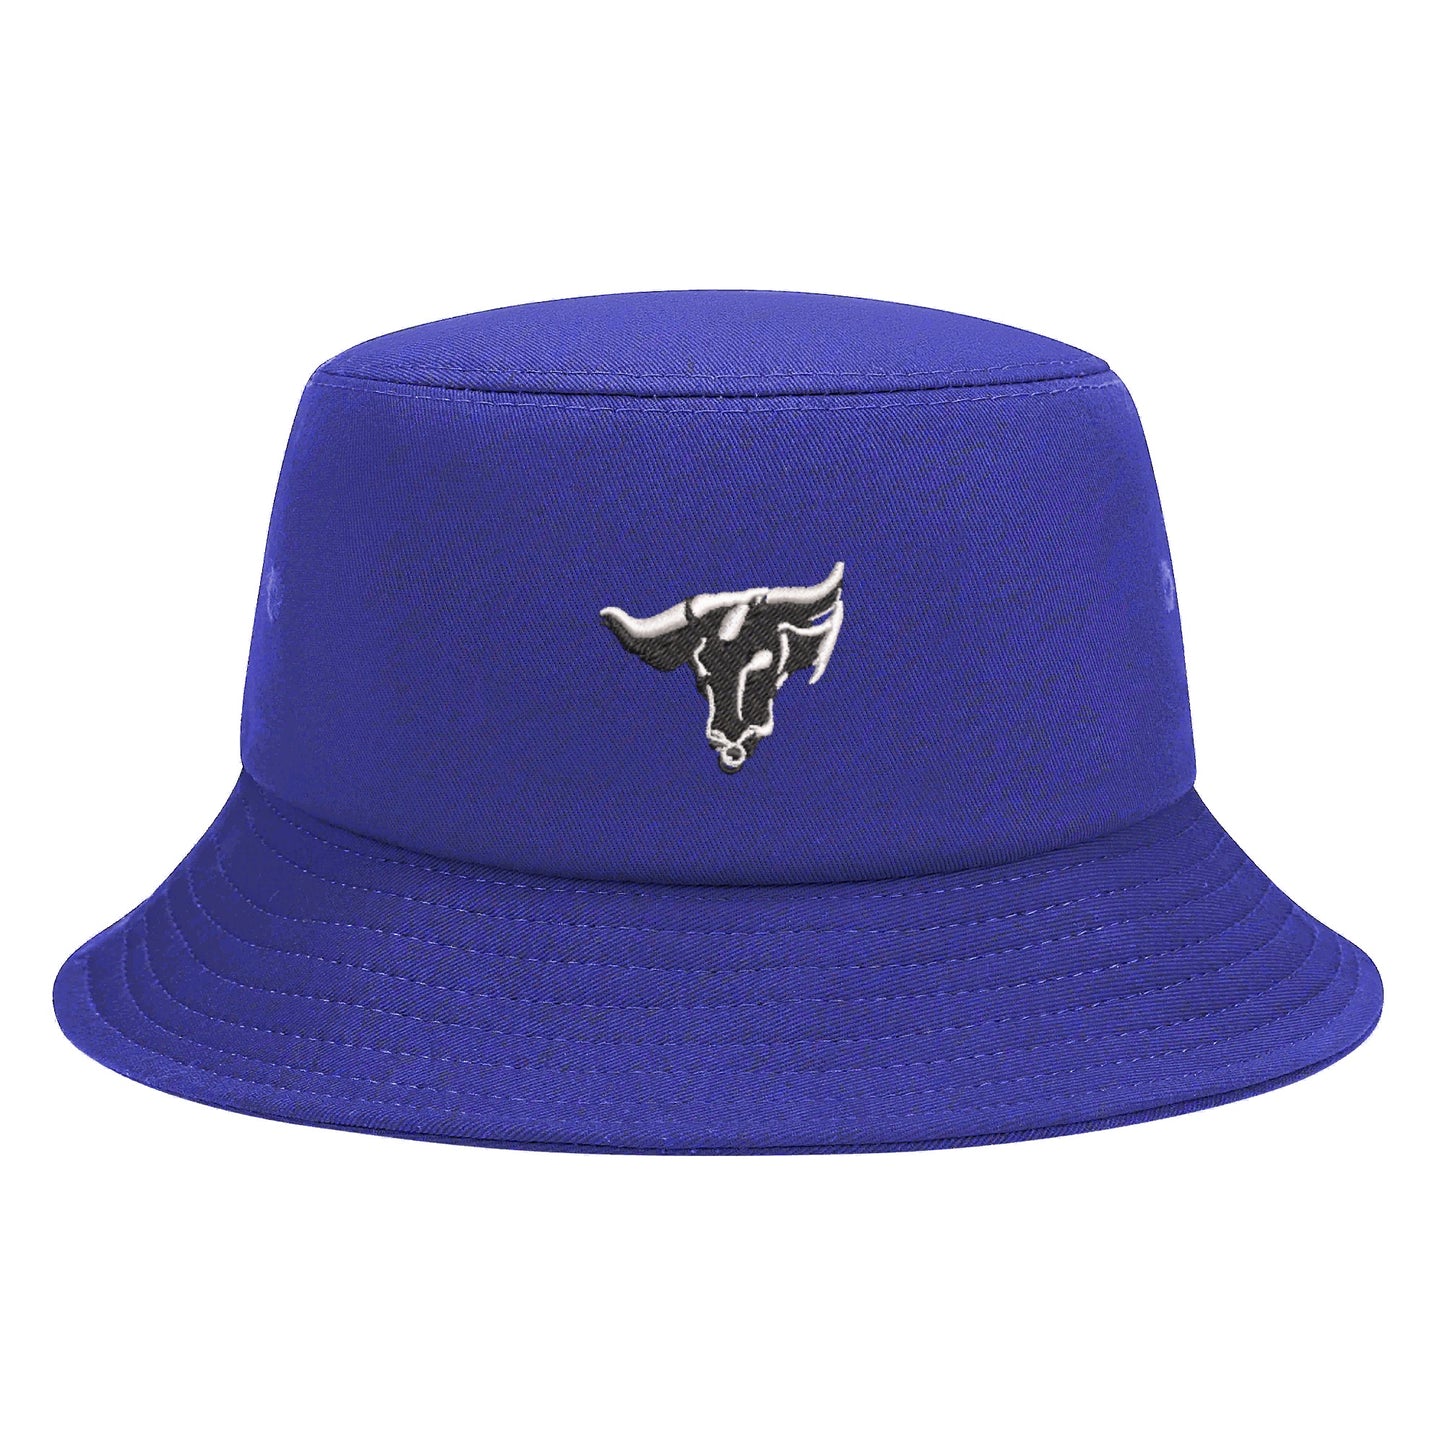 fz embroidered bucket hats blue / universal